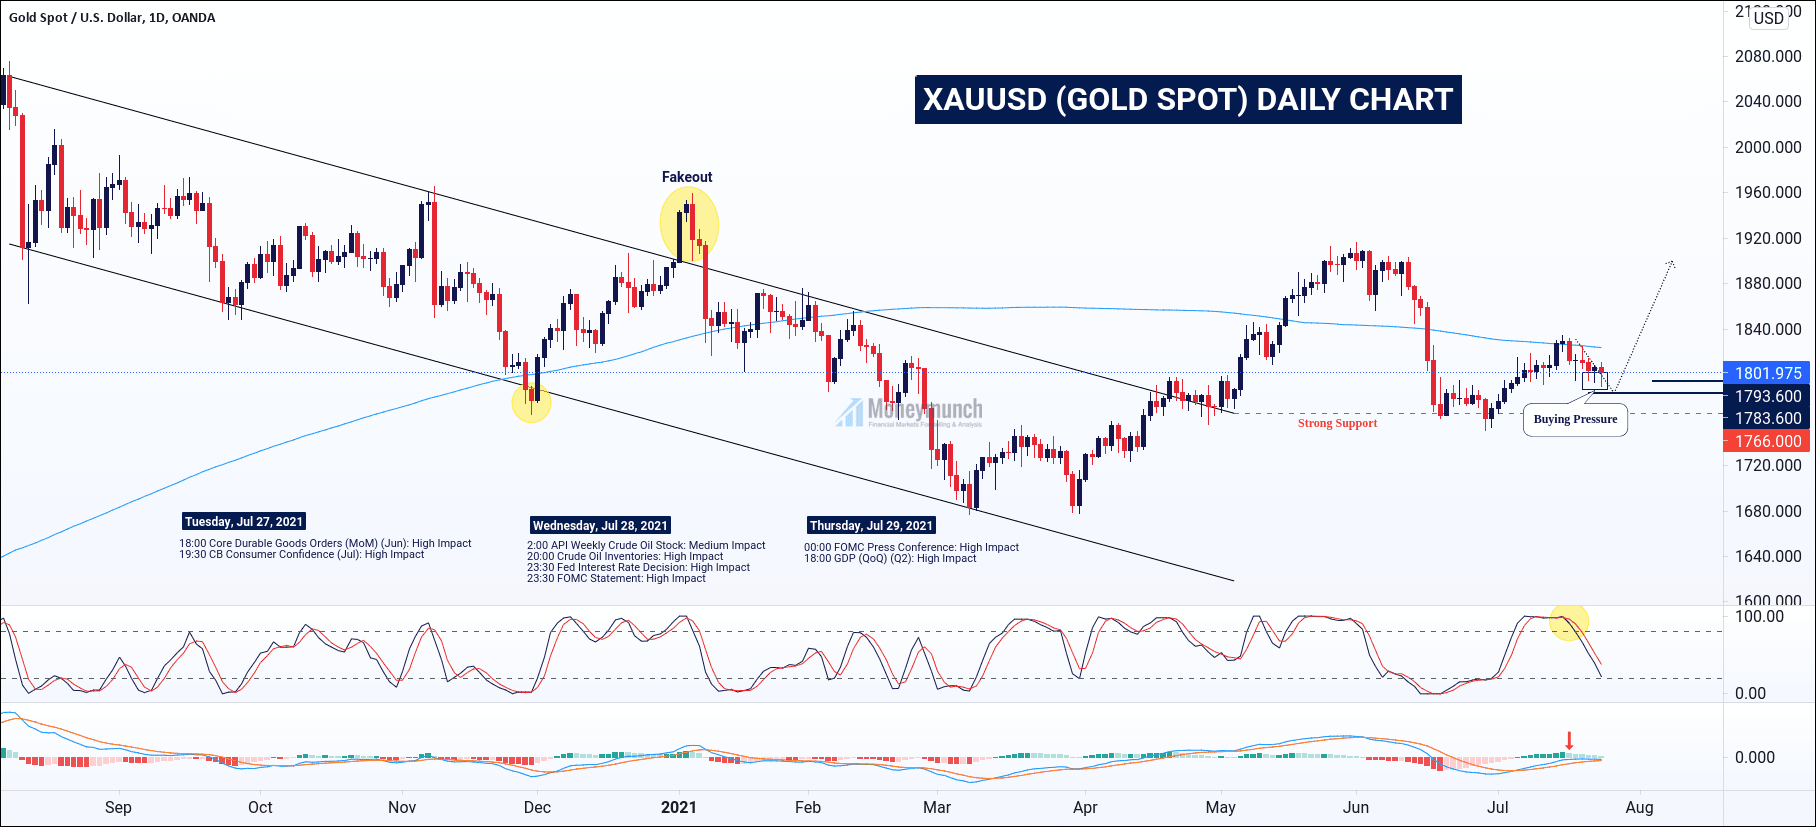 free commodity xauusd gold spot daily chart tips